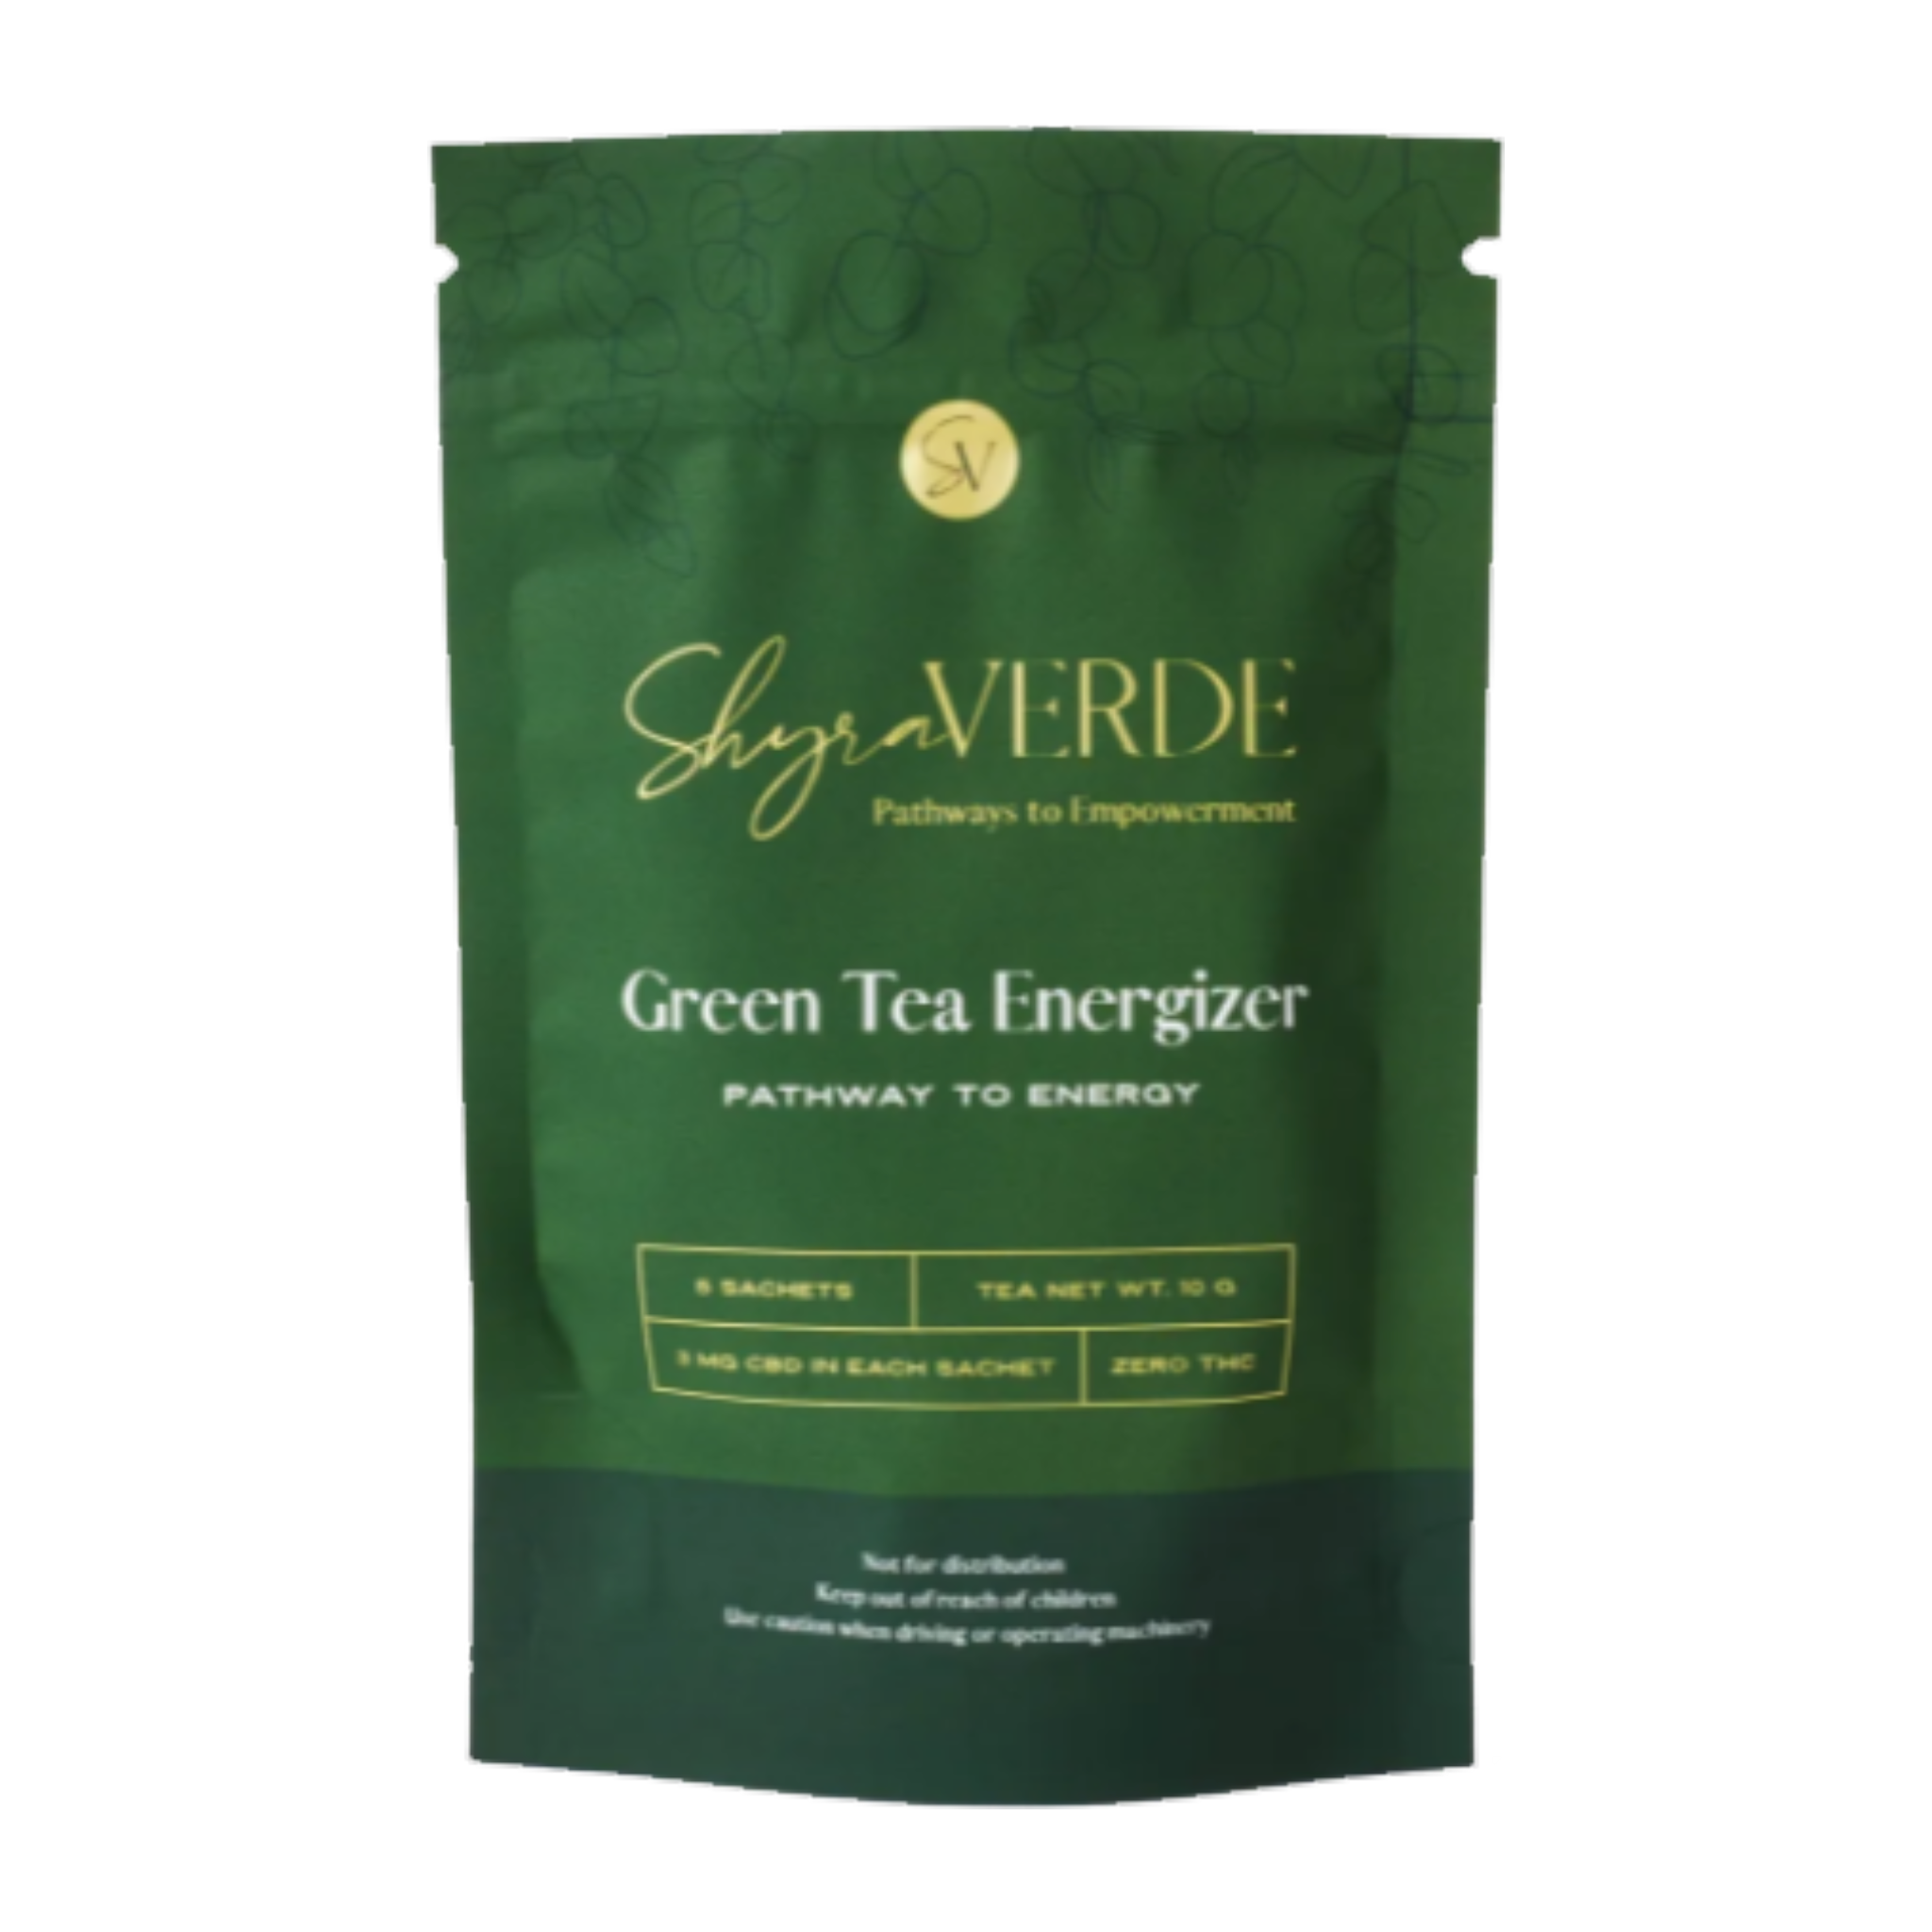 Green Tea Energizer